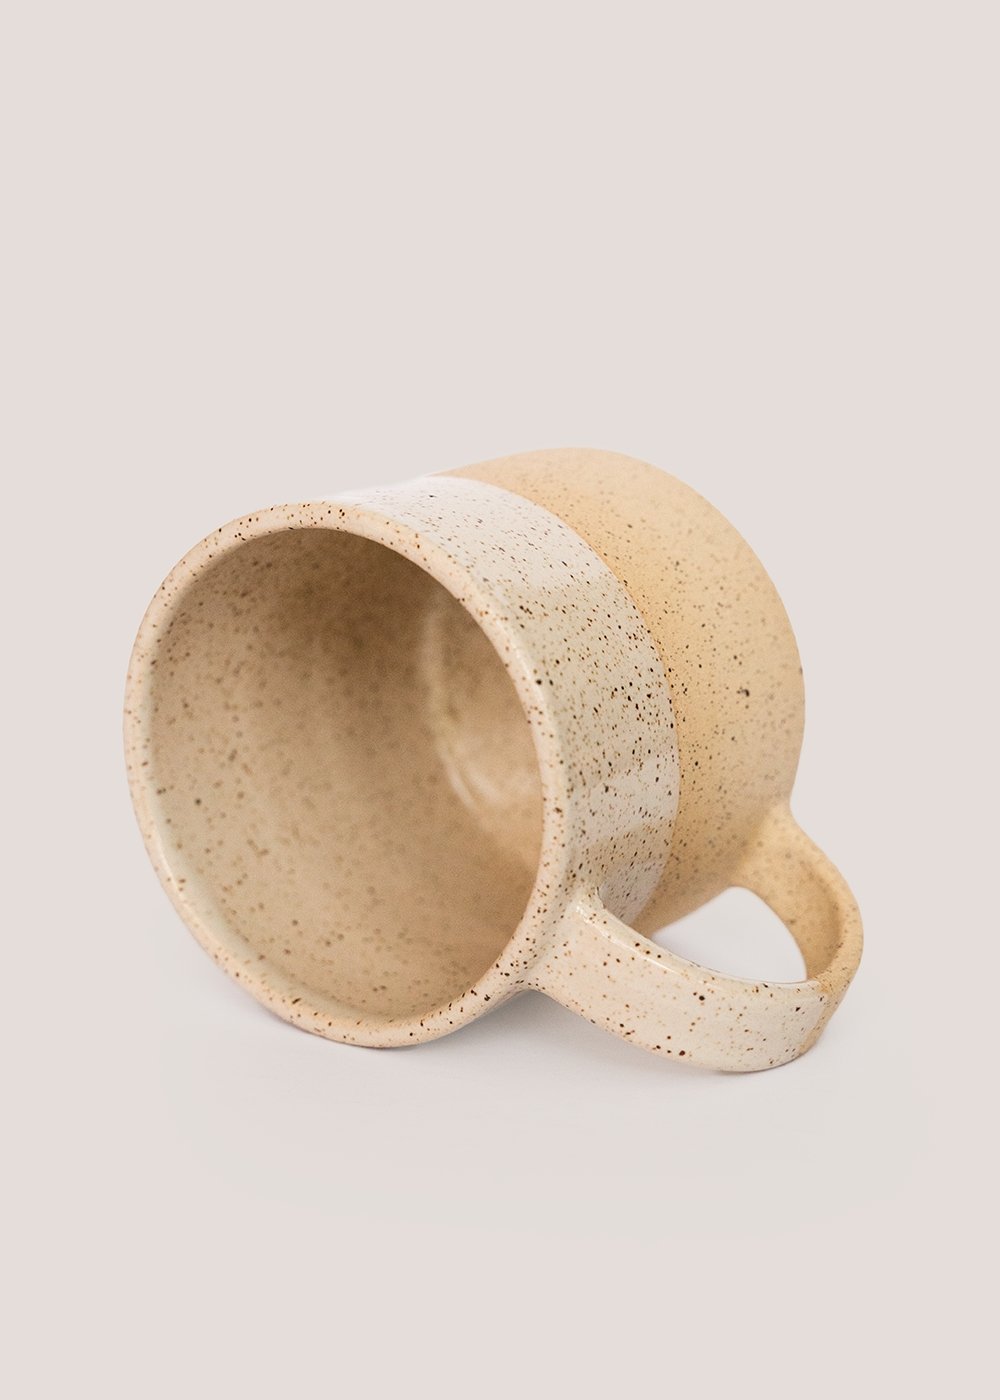 Lofi Ceramics Speckled Mug - New Classics Studios Sustainable Ethical Fashion Canada